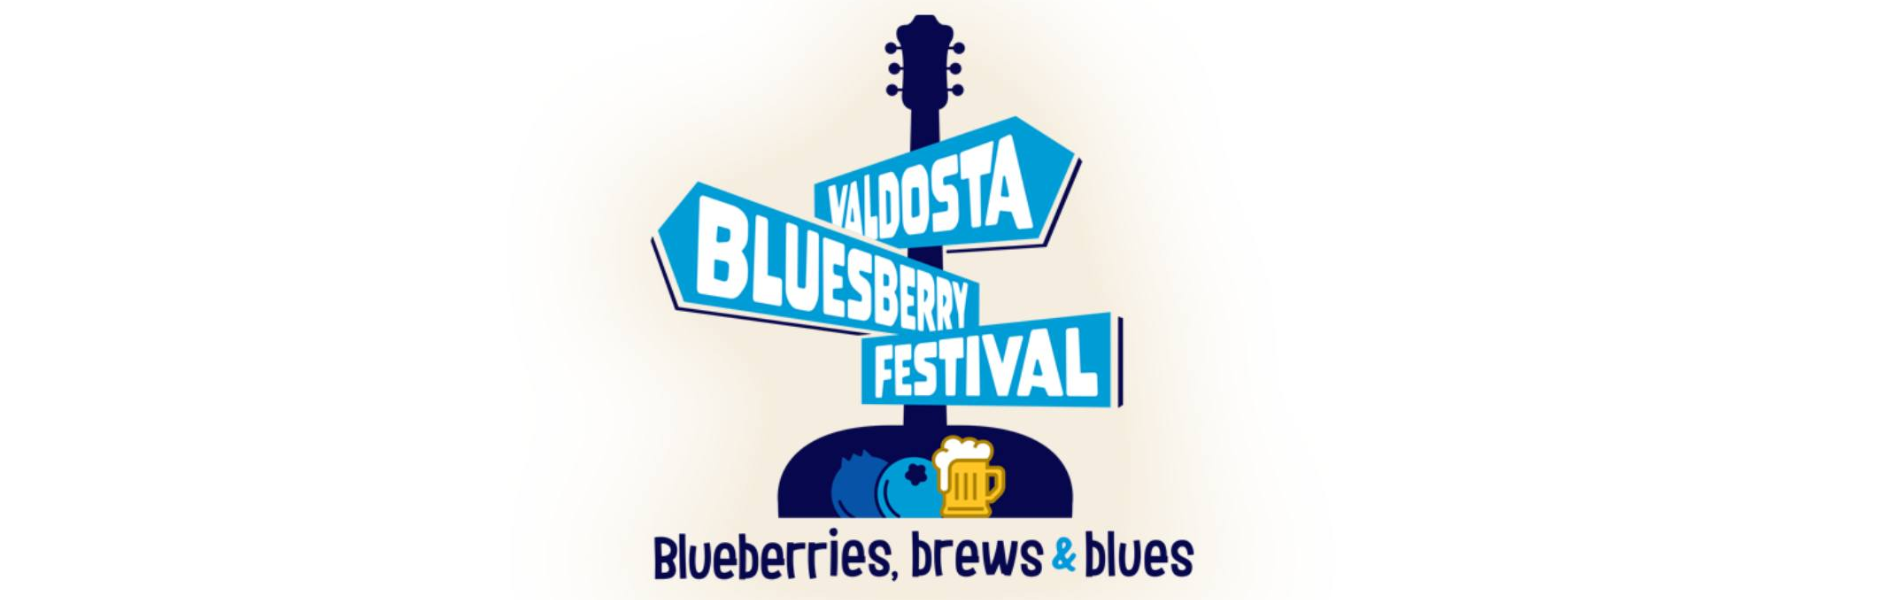 Valdosta Bluesberry Festival